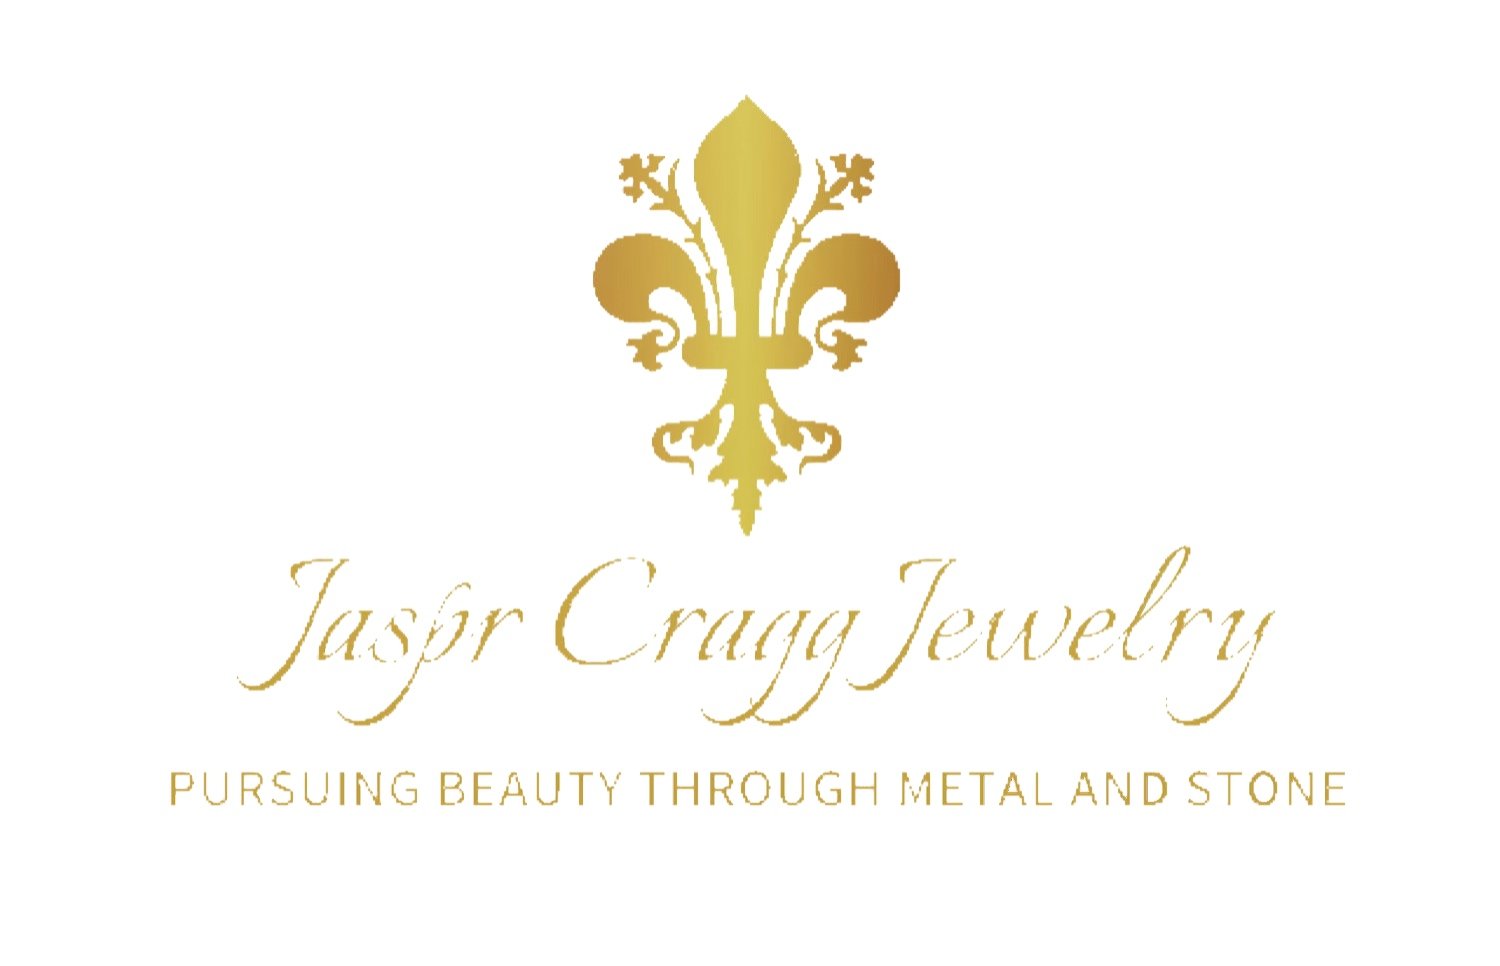 Jaspr Cragg Jewelry